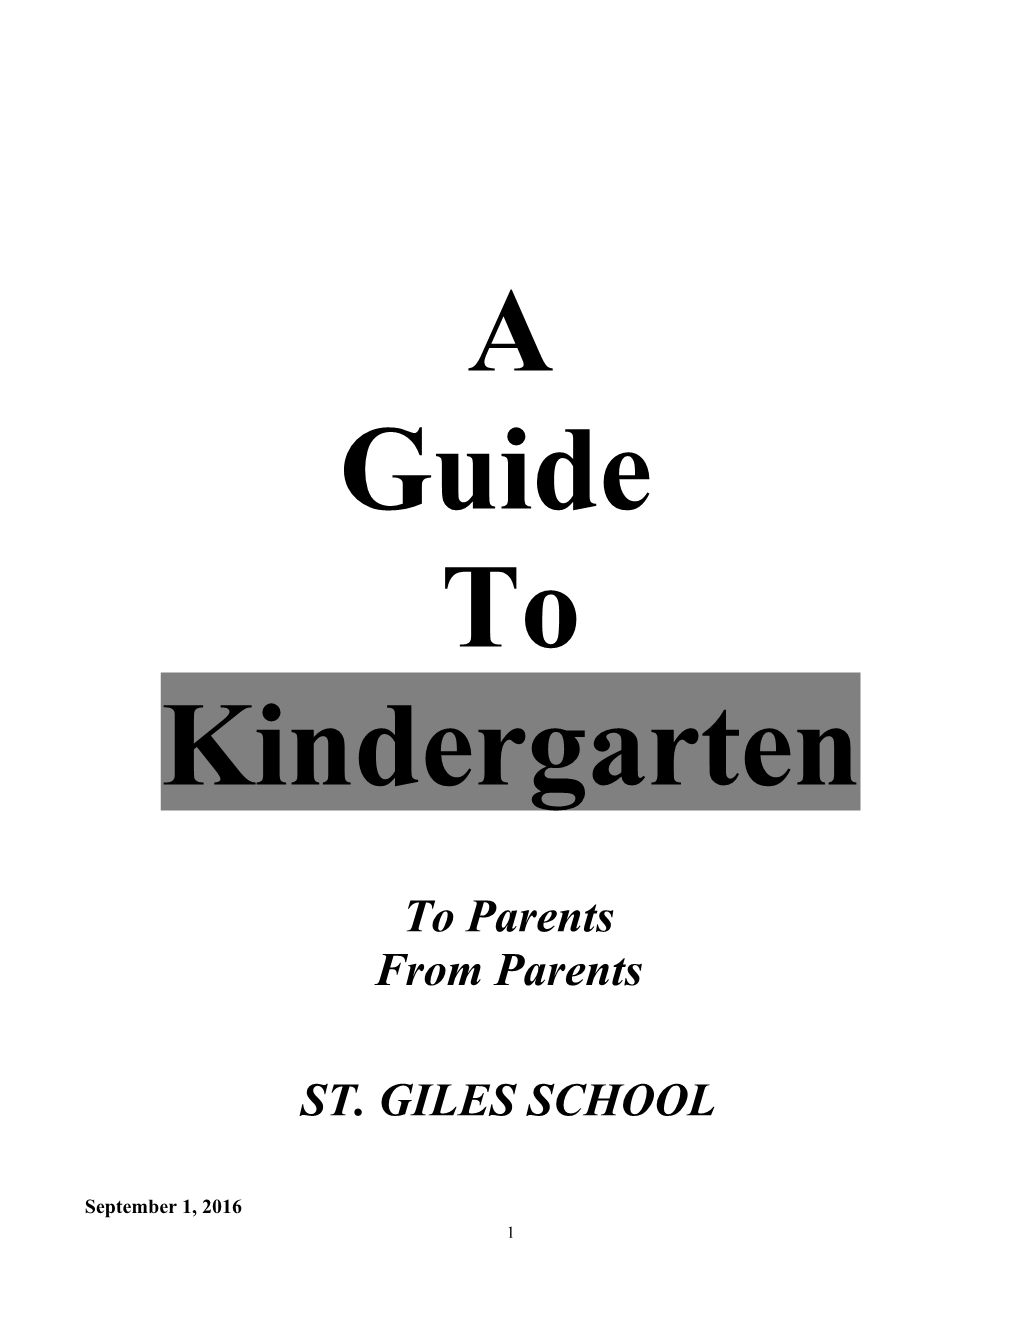 St. Giles School